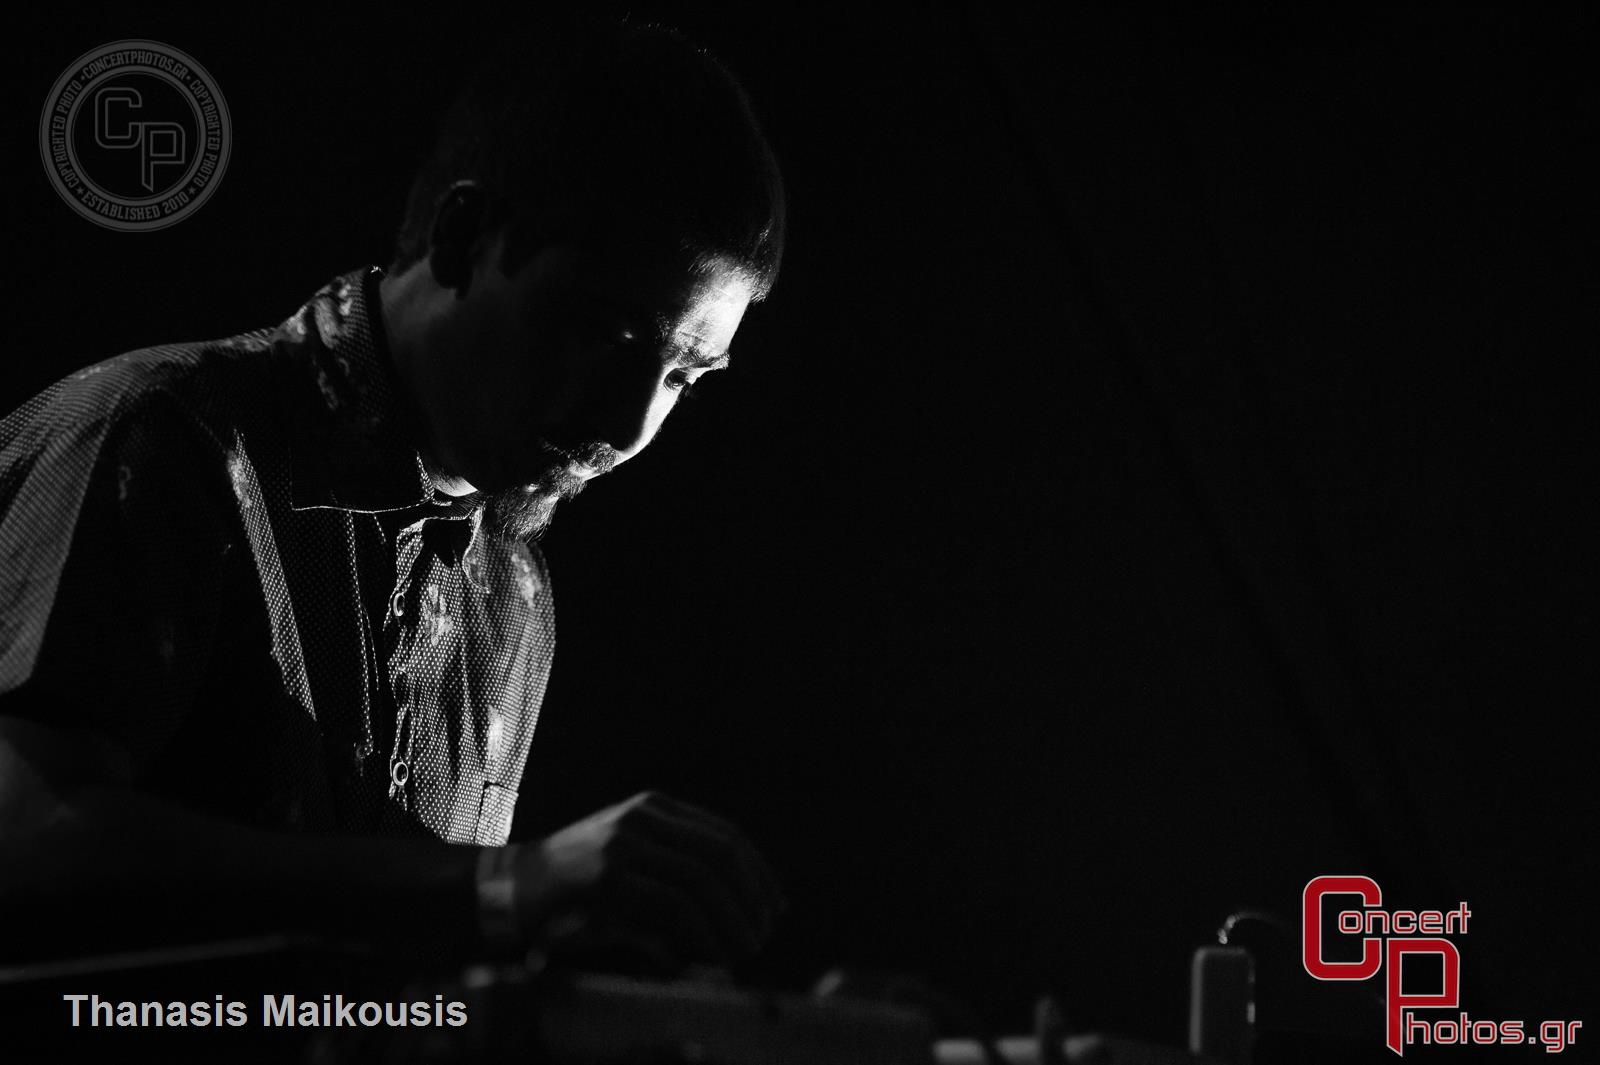 Quantic & Kill Emil -Quantic Kill Emil Gagarin photographer: Thanasis Maikousis - ConcertPhotos - 20141023_2142_15